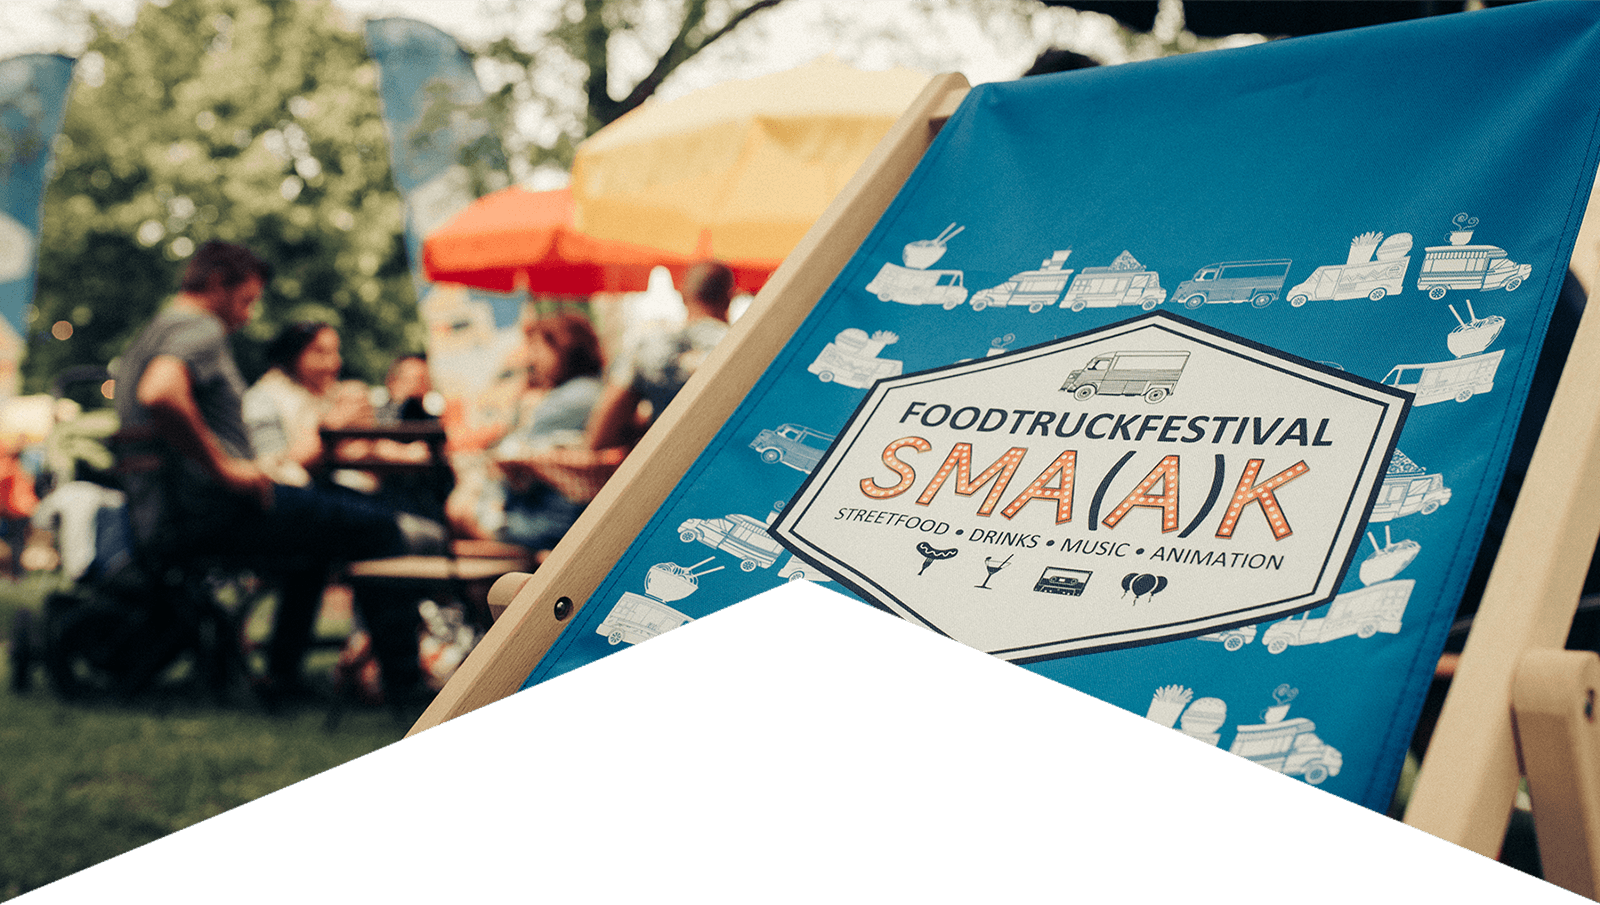 Incentive_Foodtruckfestival